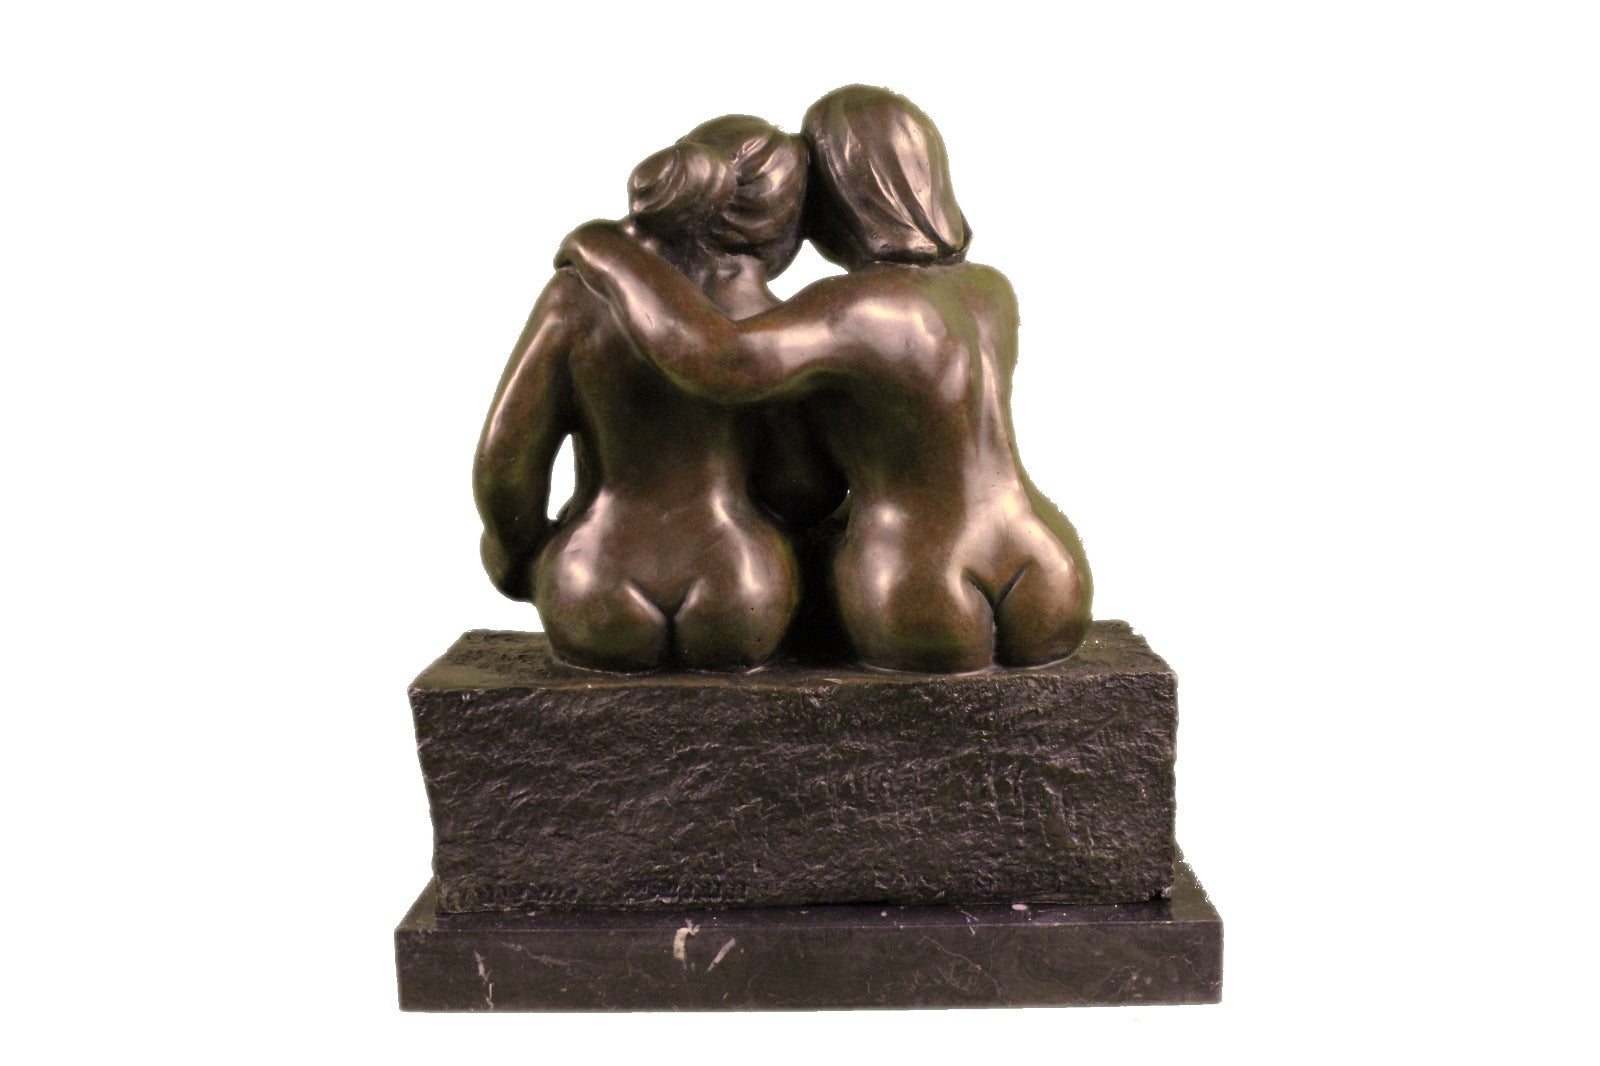 Handcrafted bronze sculpture SALE Nude Sensual Art Abstract Figurative Botero